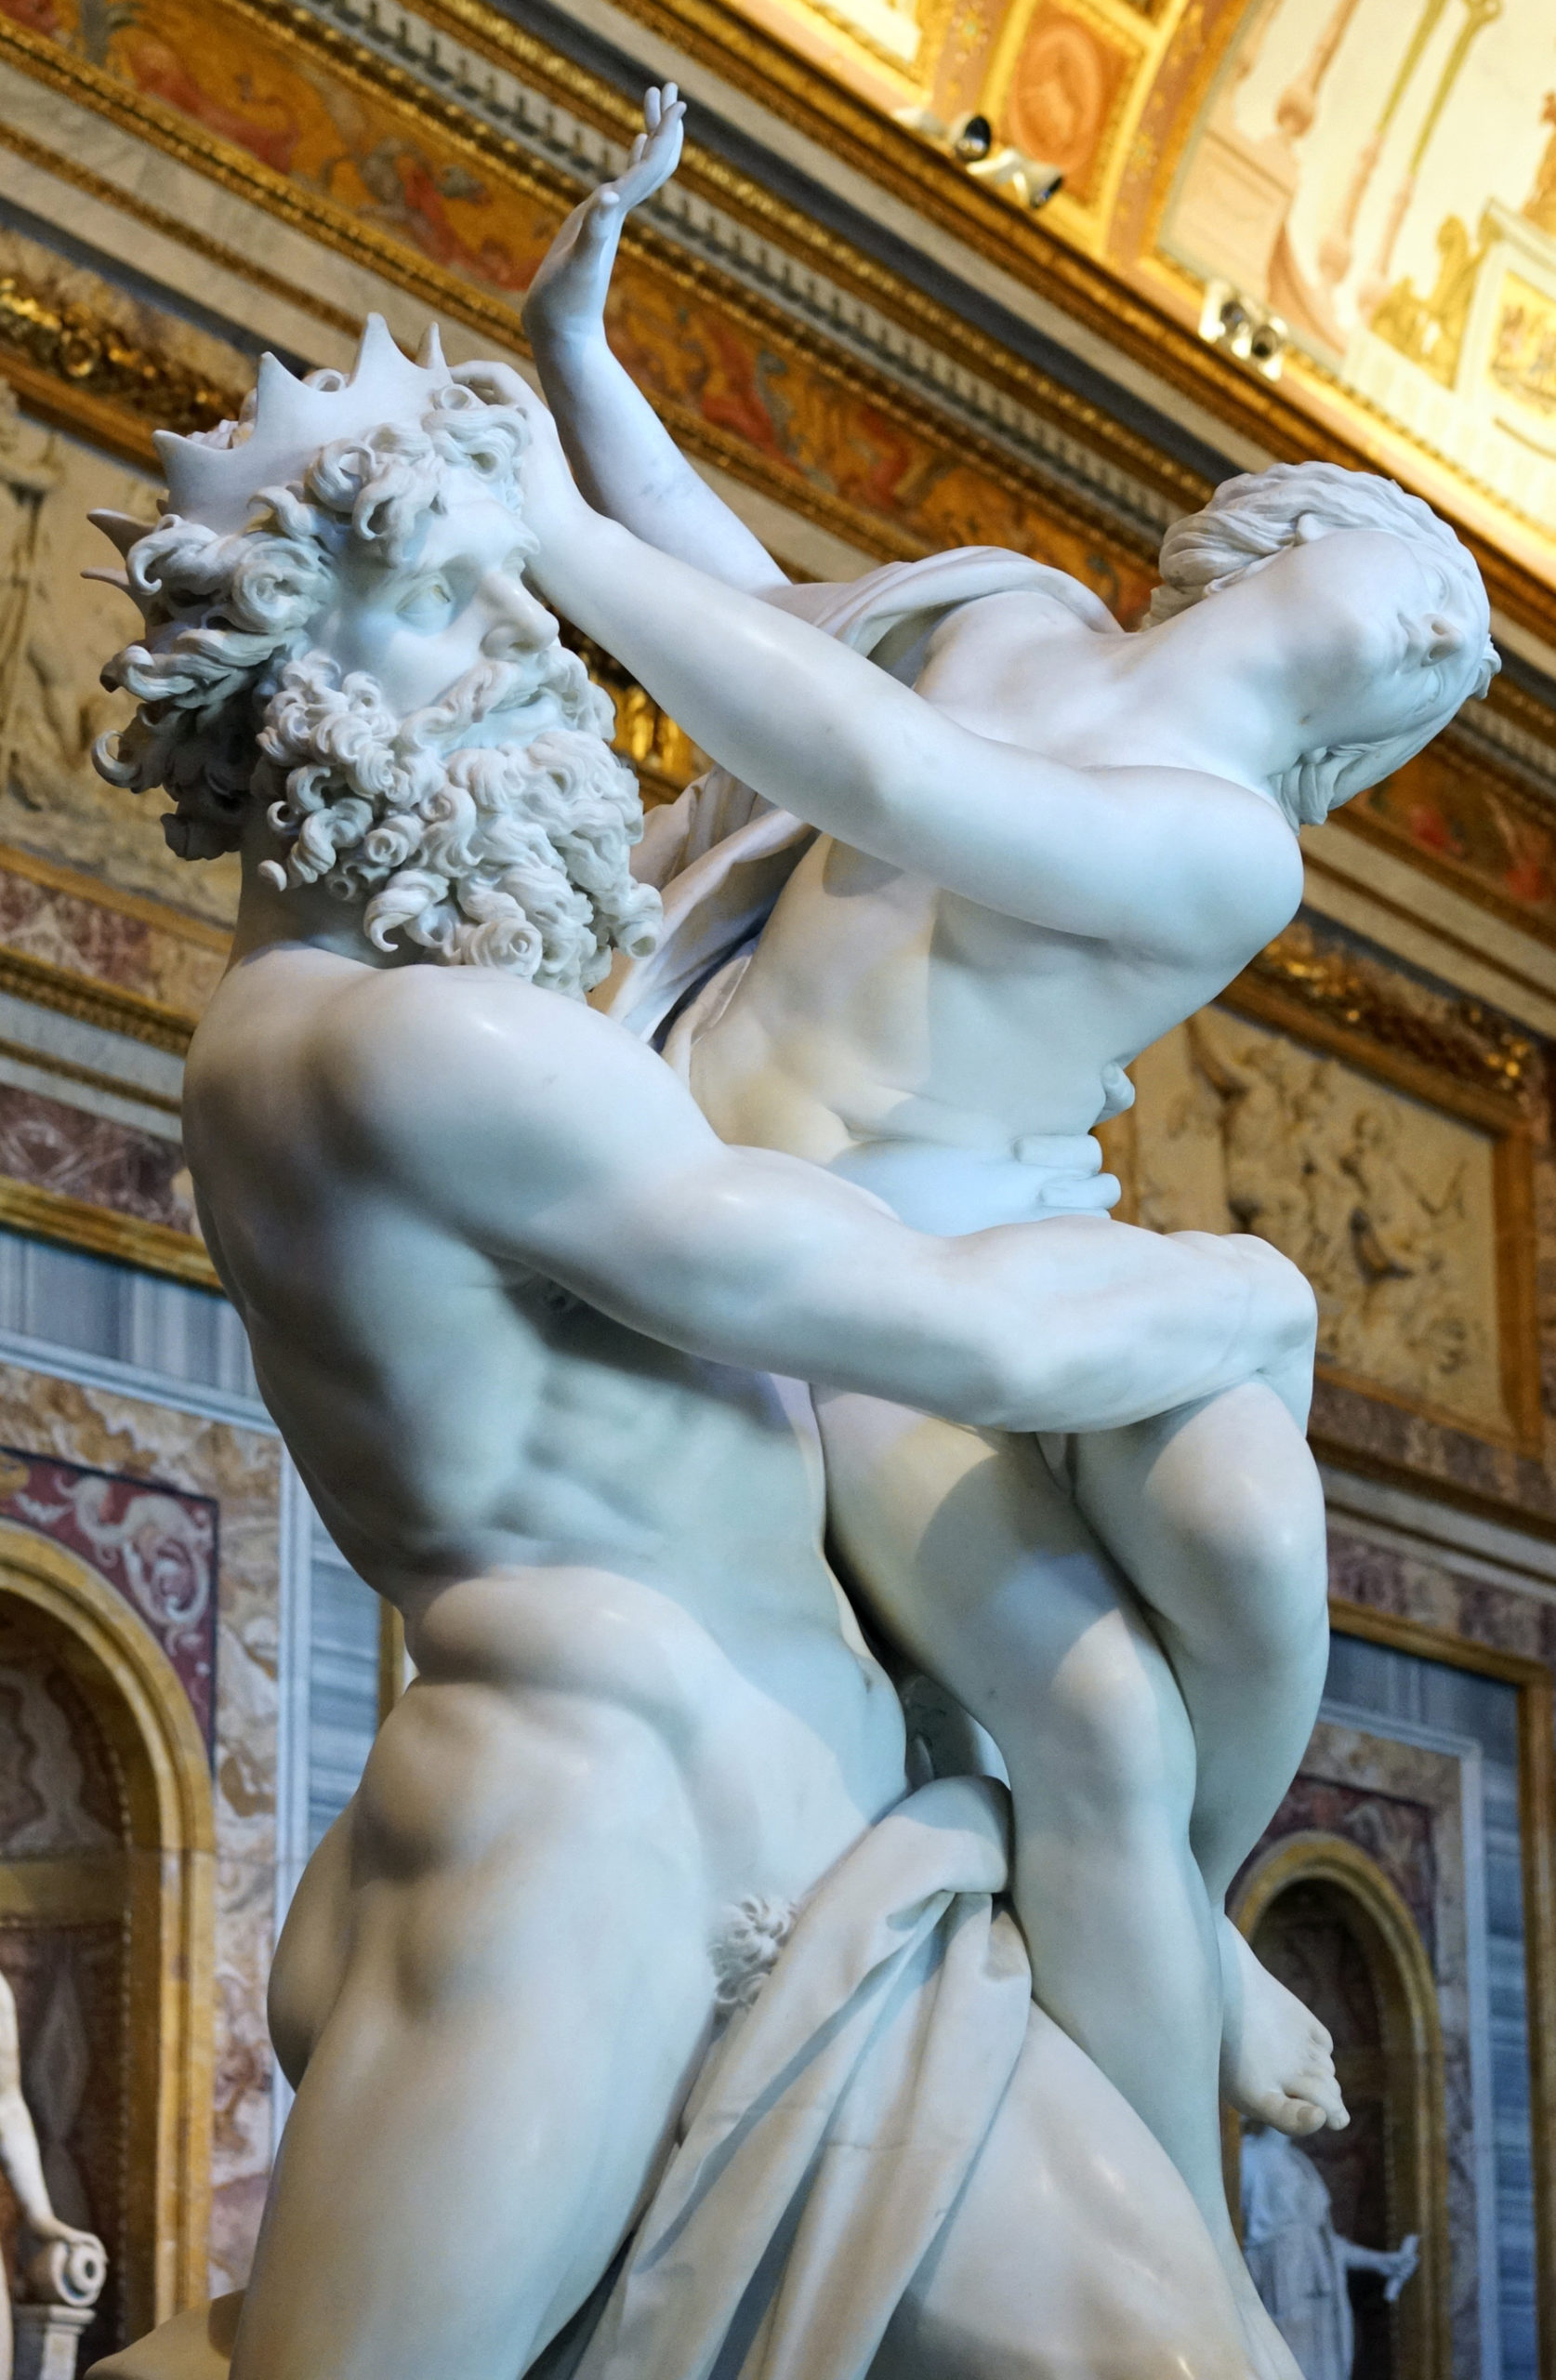 Bernini, Pluto and Proserpina, 1621-22, marble (Galleria Borghese, Rome, photo: Steven Zucker, CC BY-NC-SA 2.0)